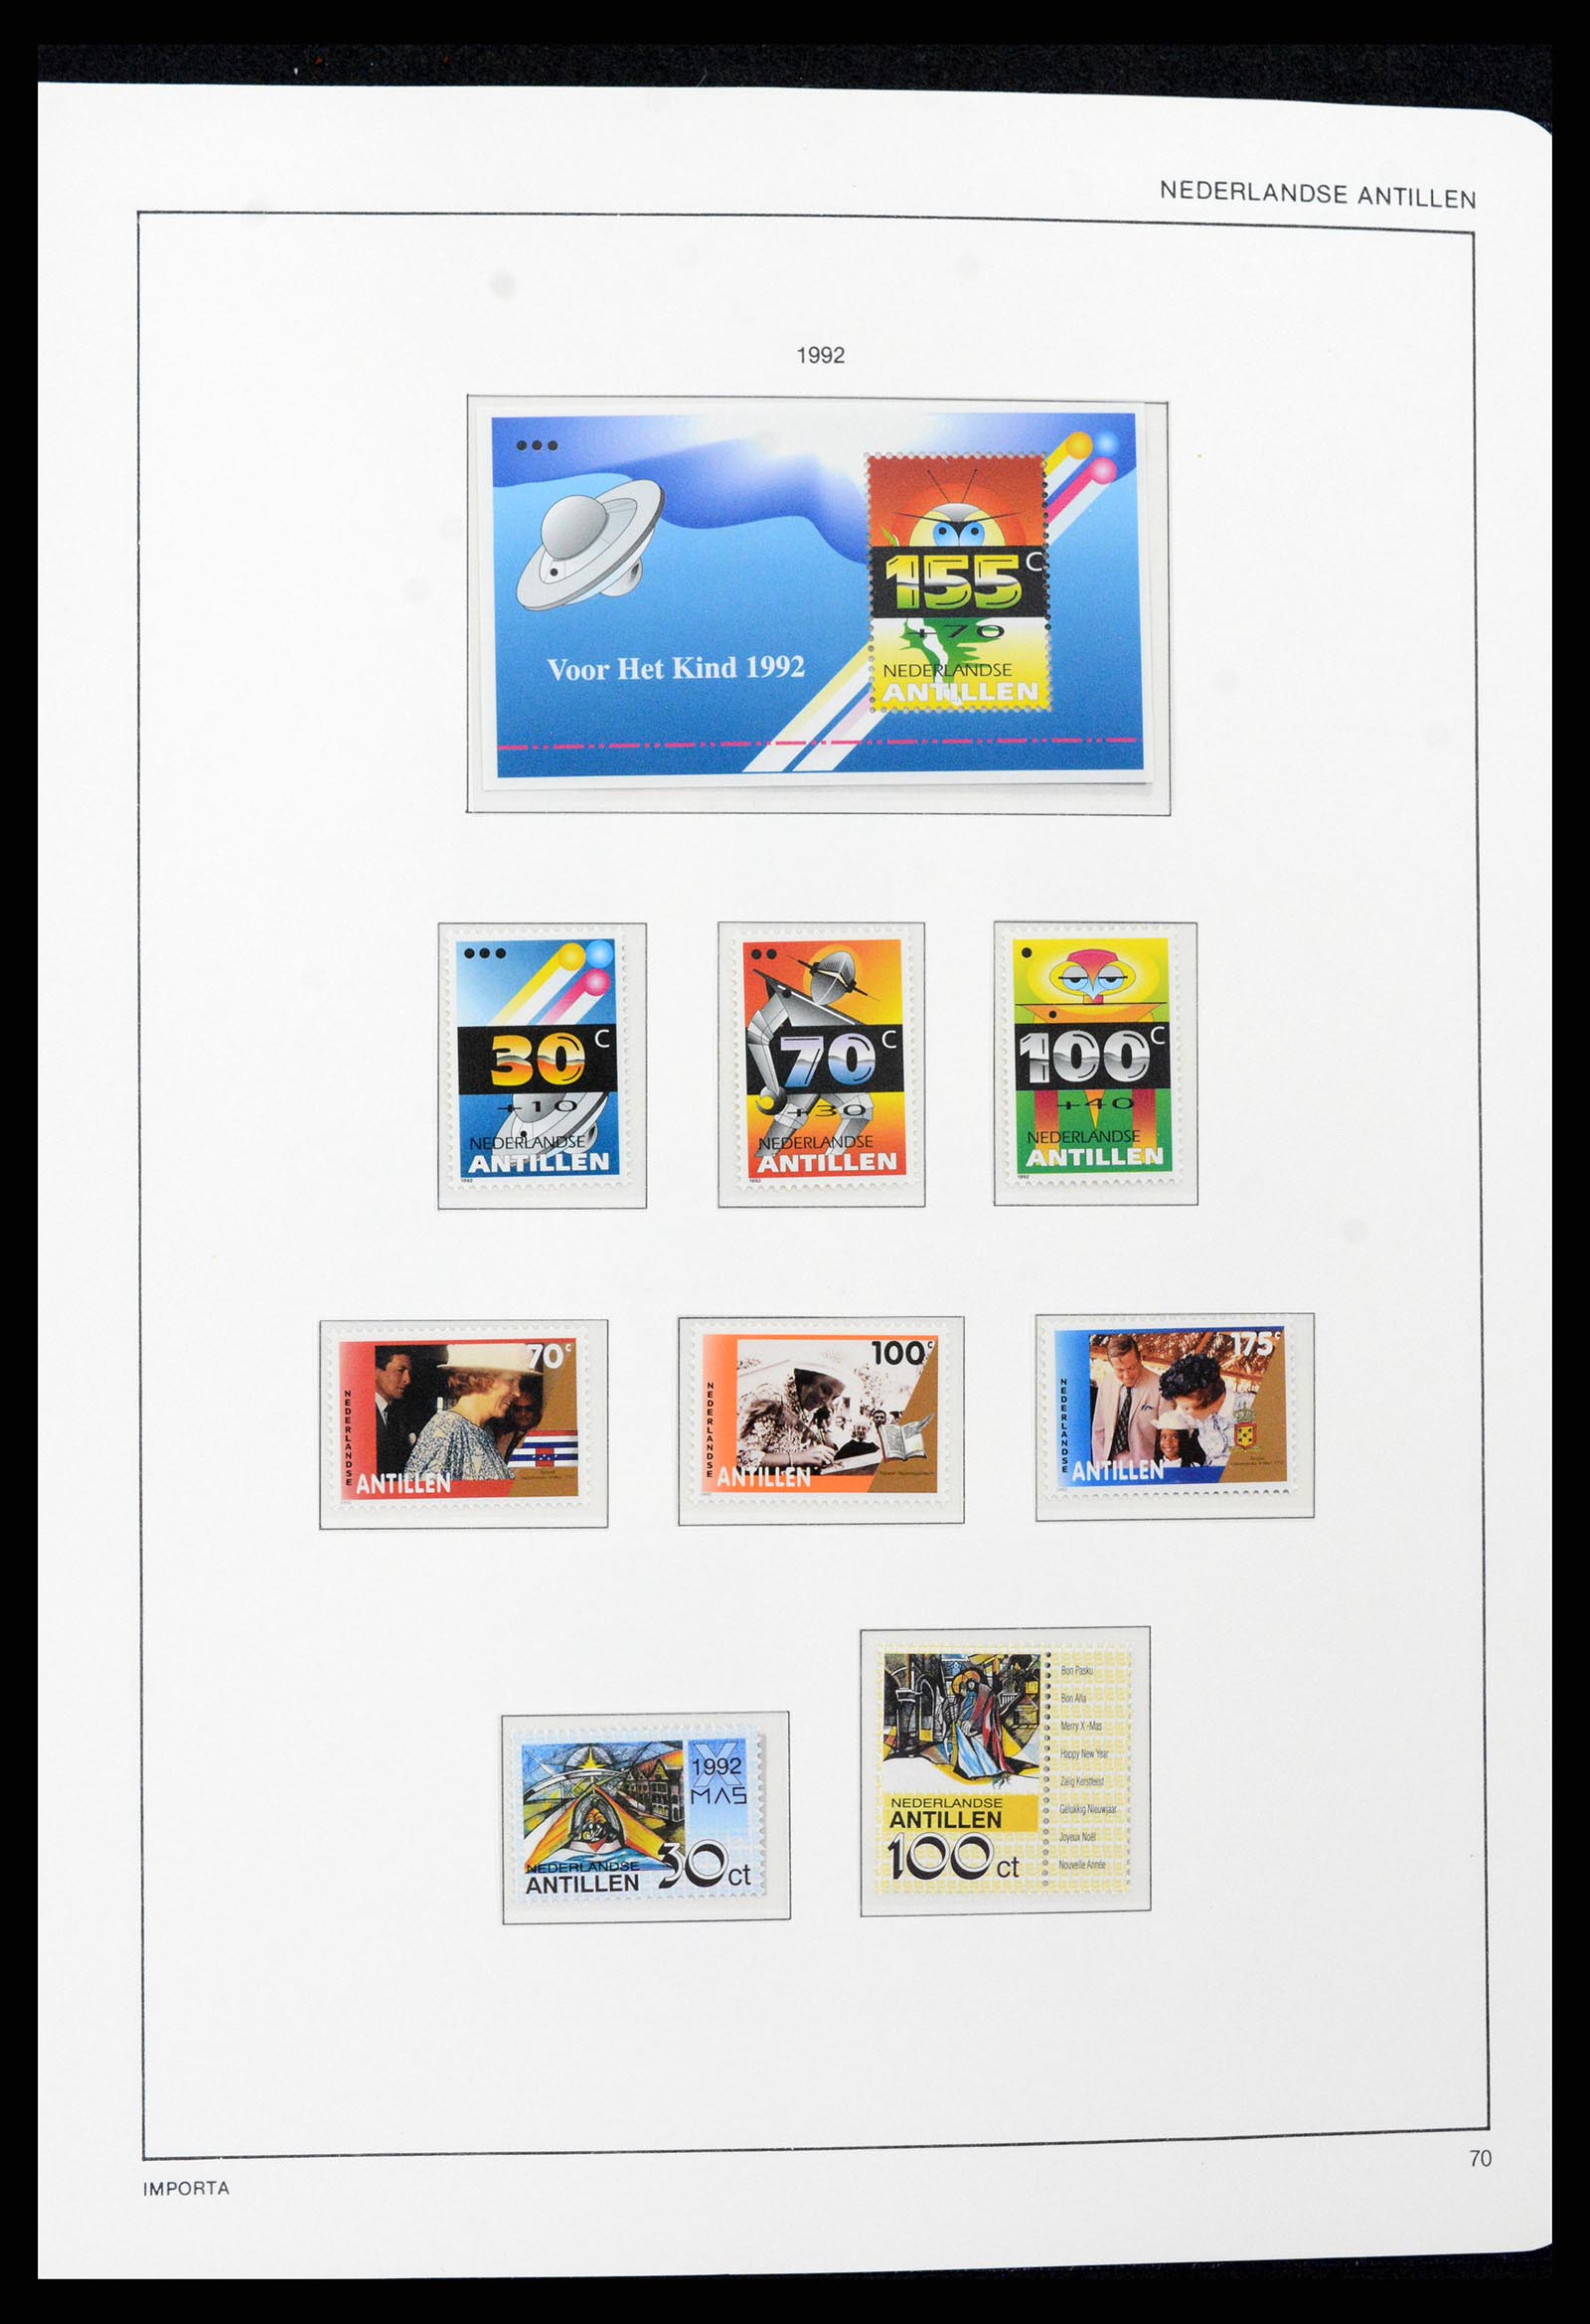 37693 071 - Stamp collection 37693 Netherlands Antilles 1949-2001.